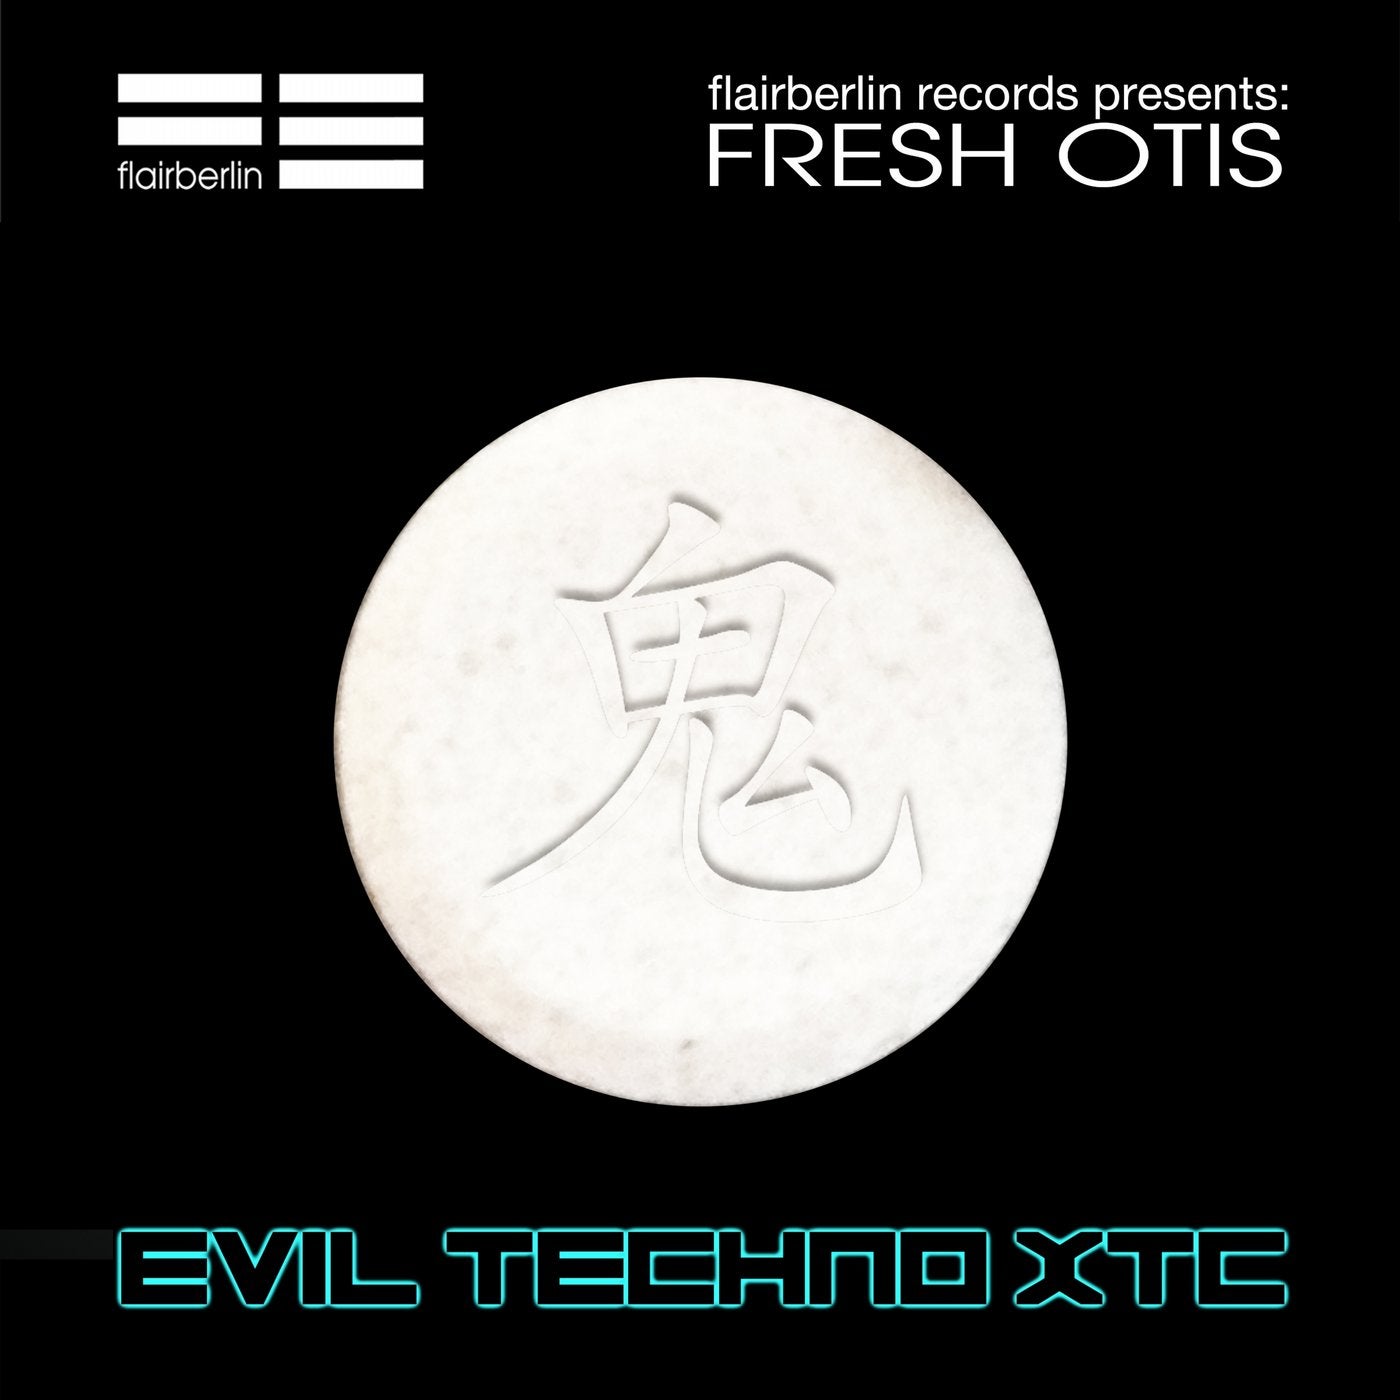 Evil Techno XTC